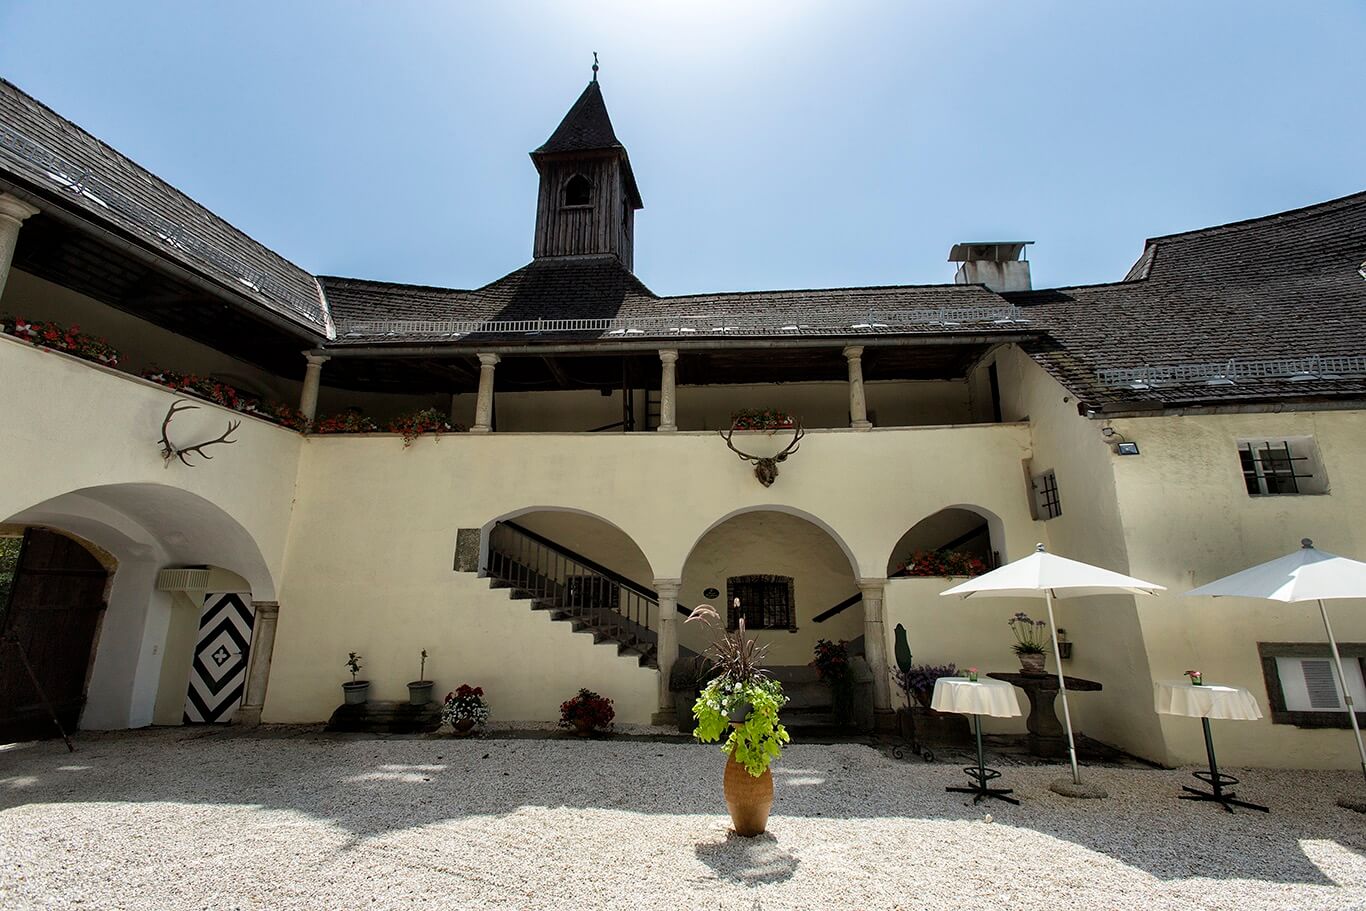 castle moosburg courtyard